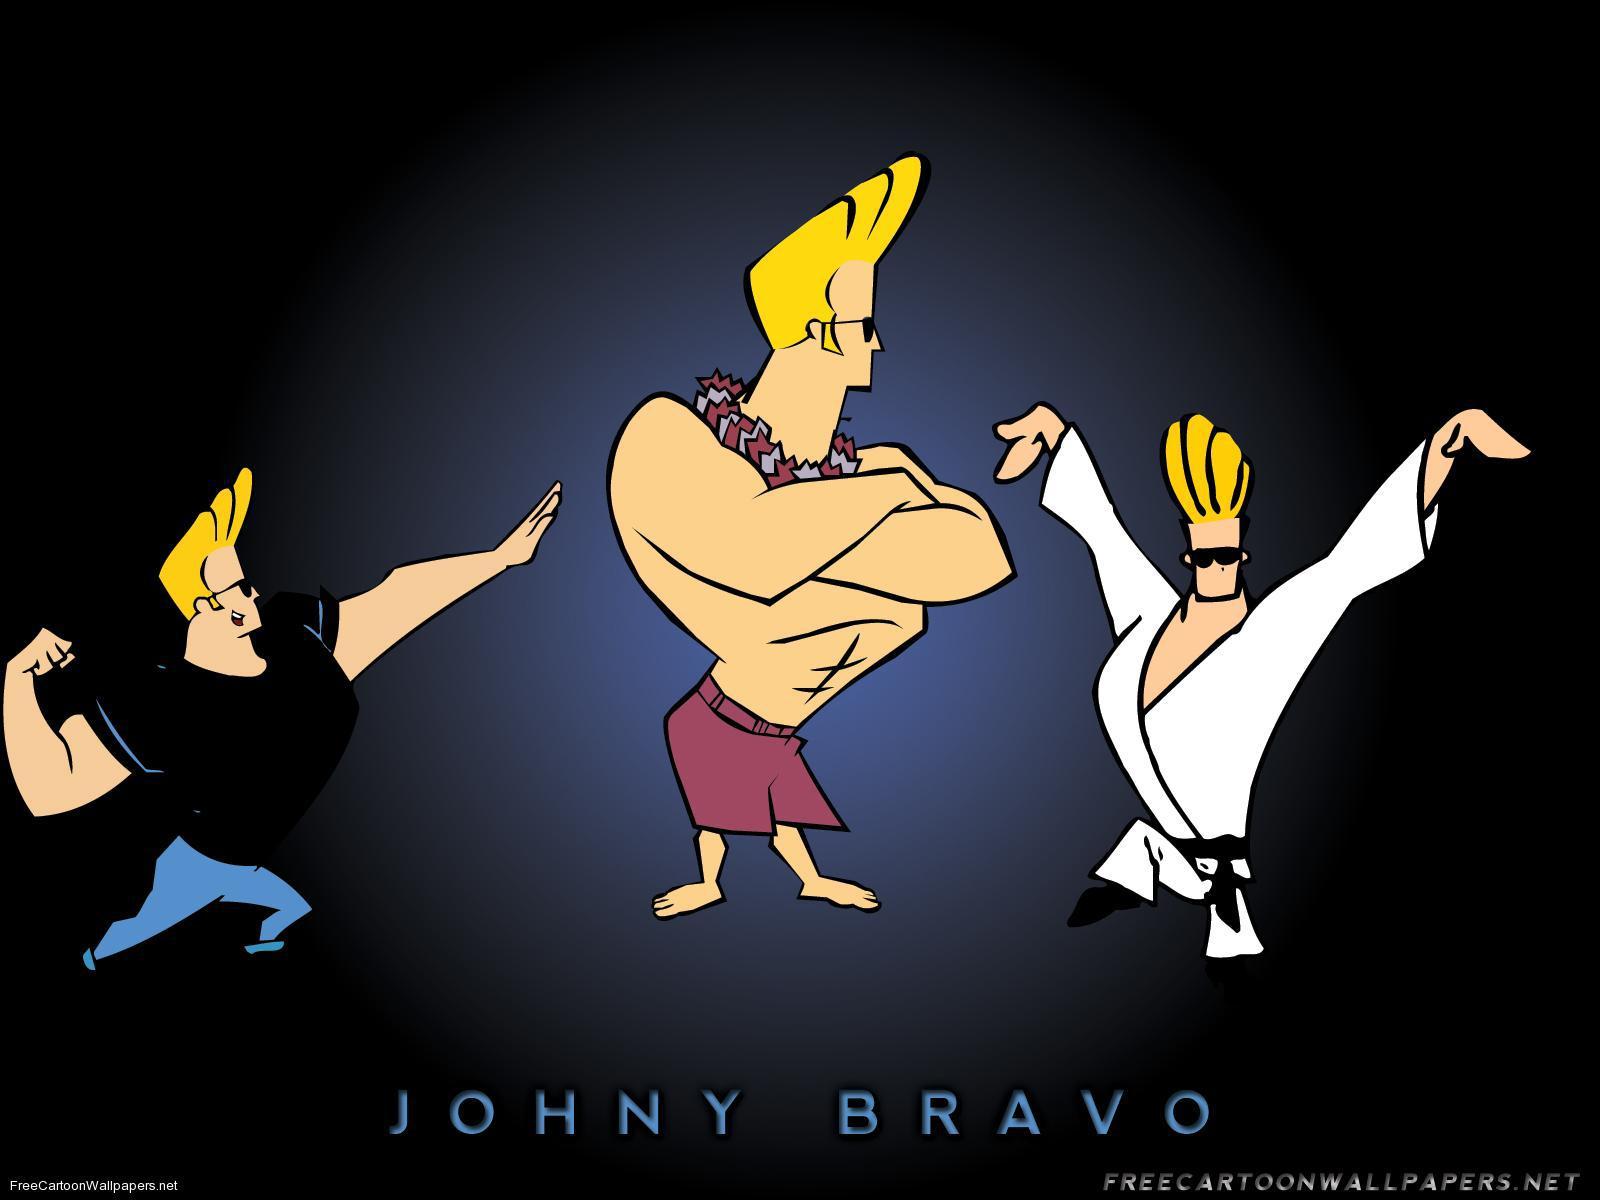 Johnny Bravo Wallpaper, 35 Best HD Image of Johnny Bravo, HDQ